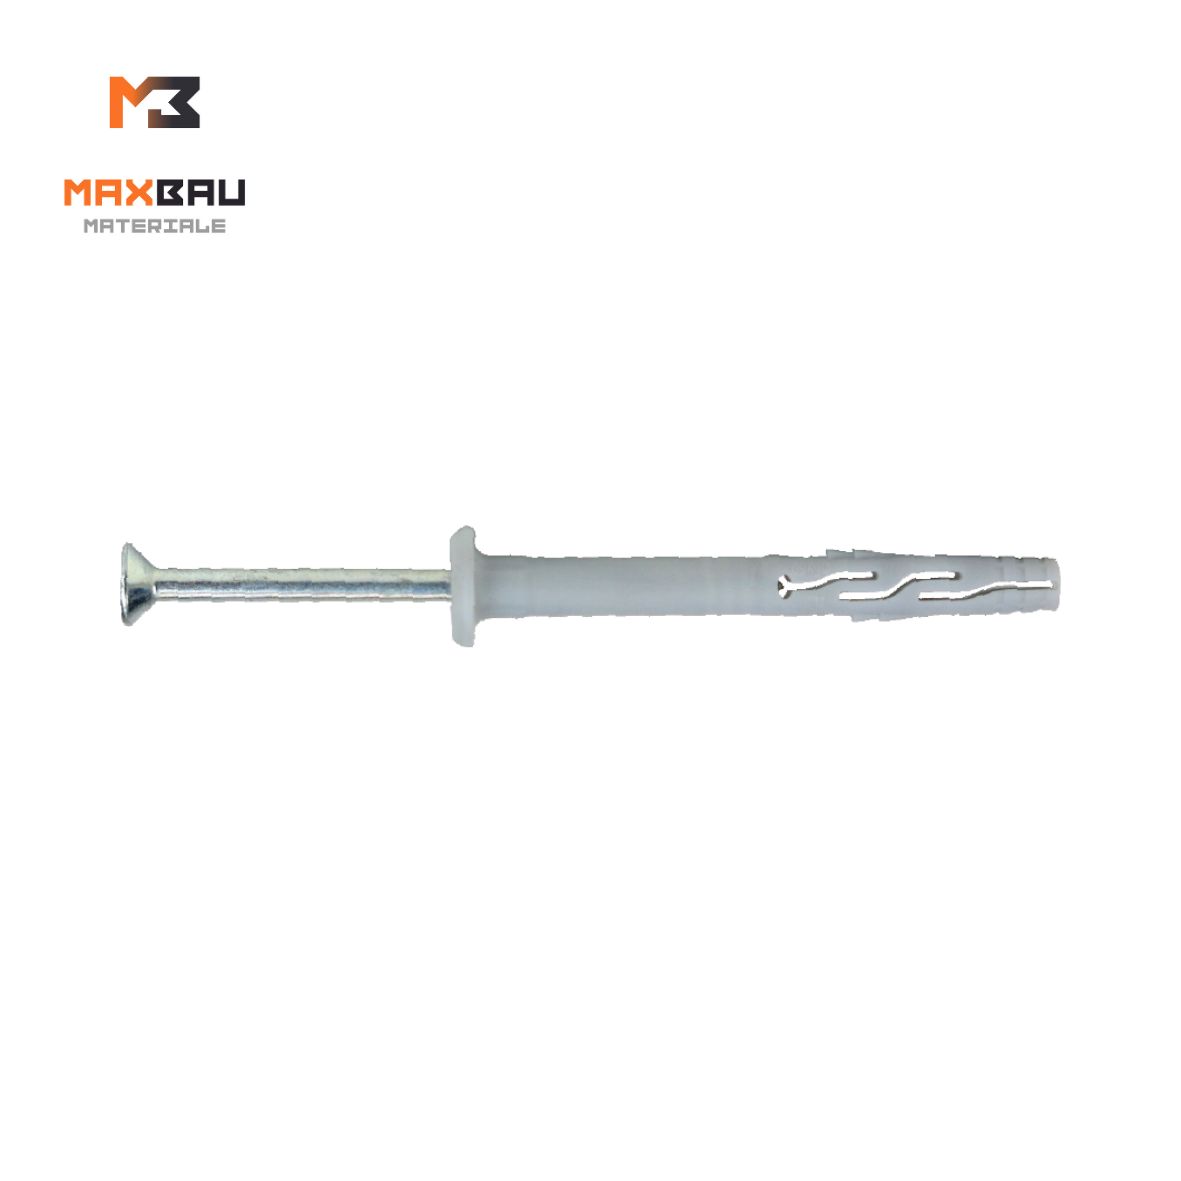 Dowels for plasterboard - Maxbau 6 x 40 mm double screw, 200 pcs/carton, https:maxbau.ro